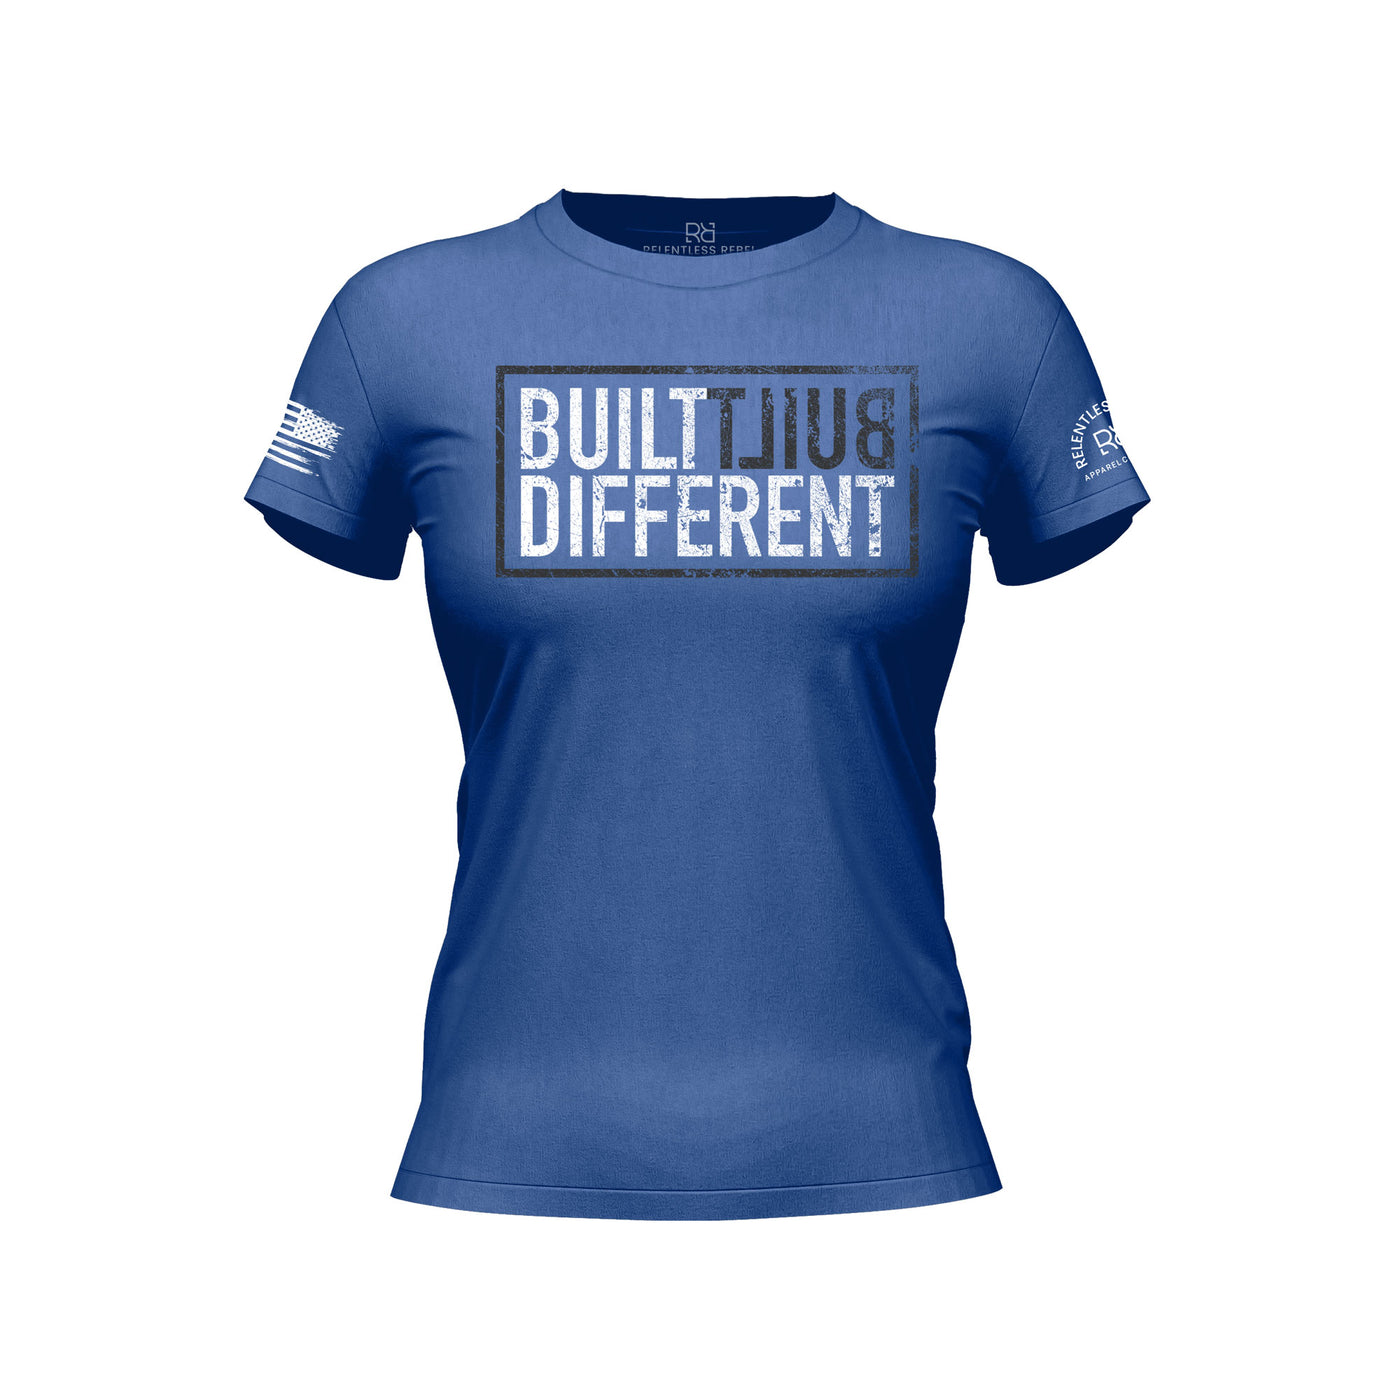 Built Different Women's Rebel Blue front design t-shirt